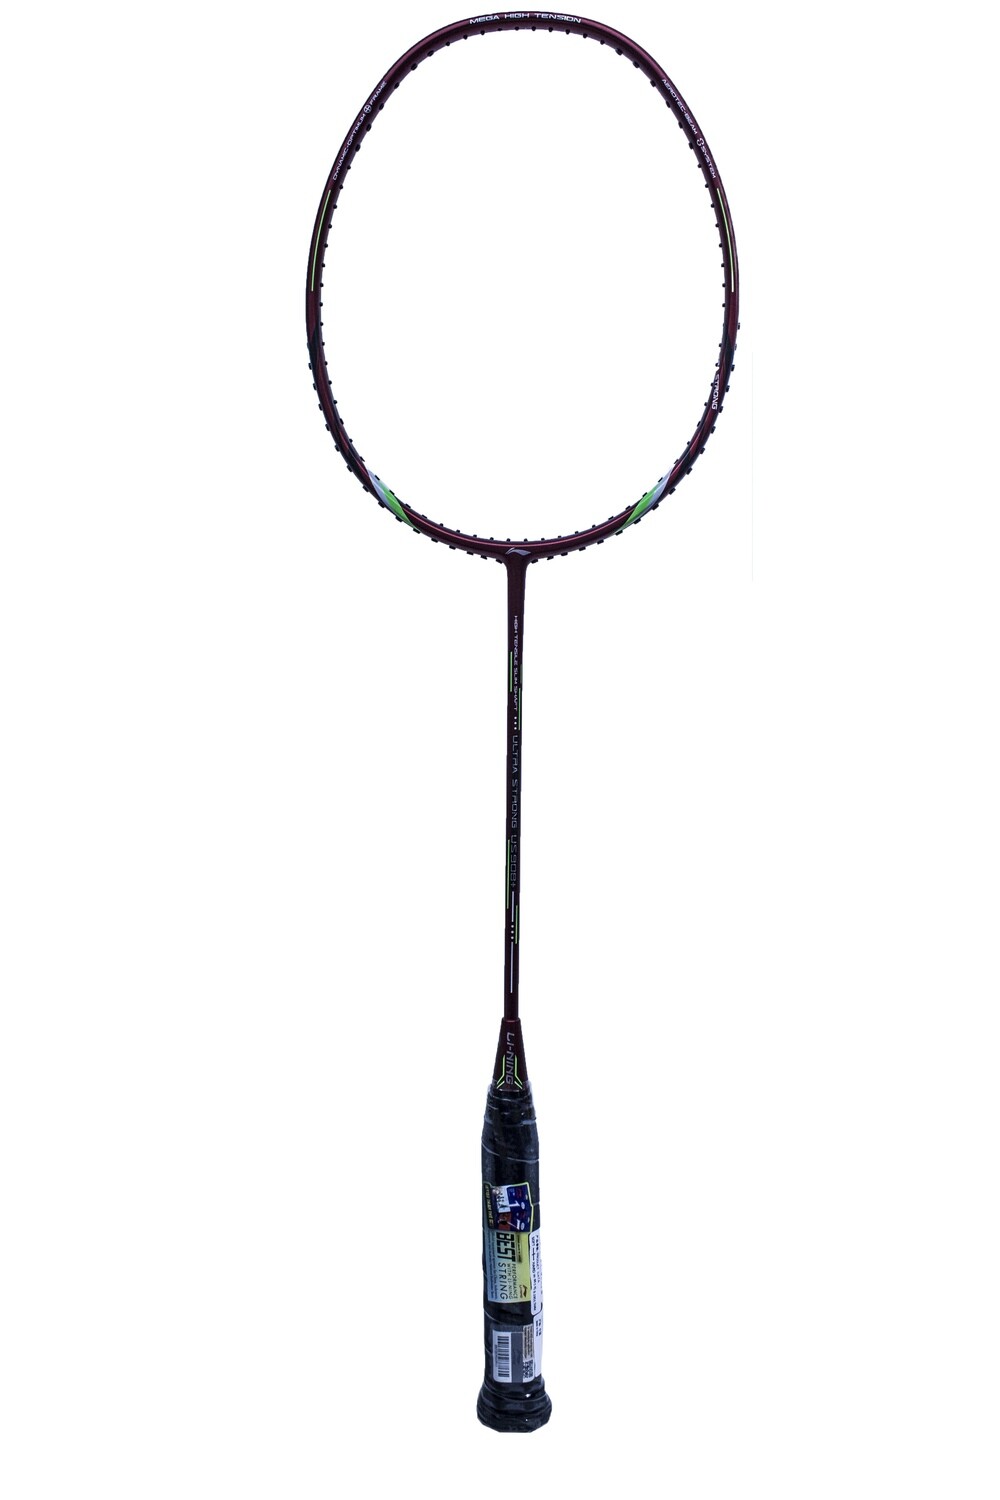 LI-NING Ultra Strong US 908+ Badminton Racquet -